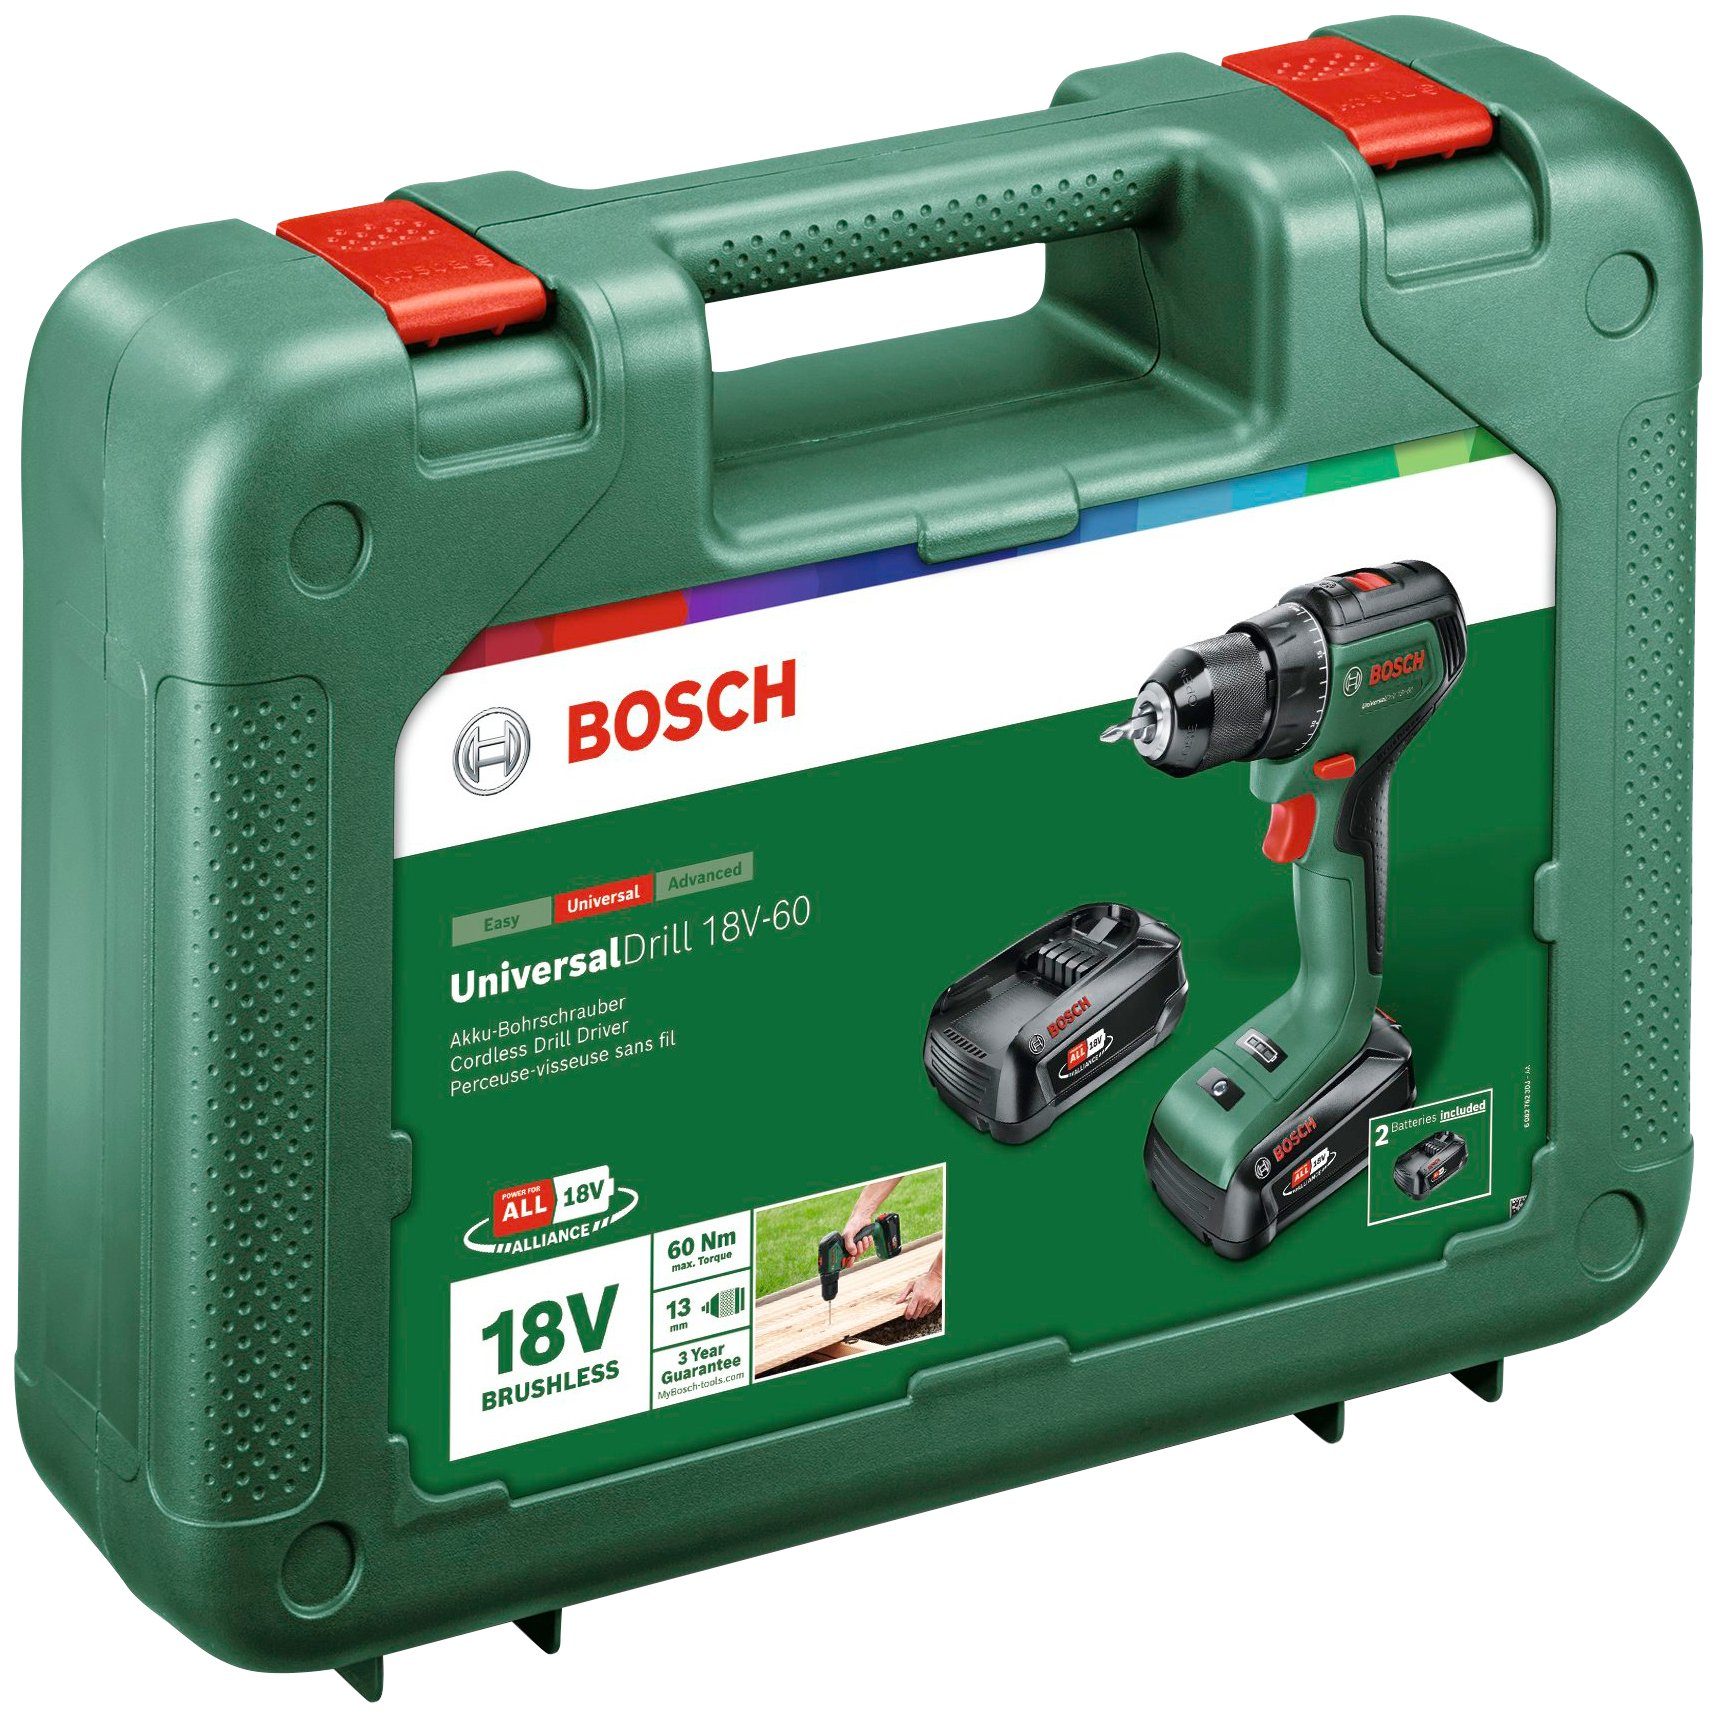 Bosch Home & Garden Akkus Akku-Bohrschrauber Ladegerät 18V-60, Inkl. mit und 2 Koffer, 18V/2Ah UniversalDrill